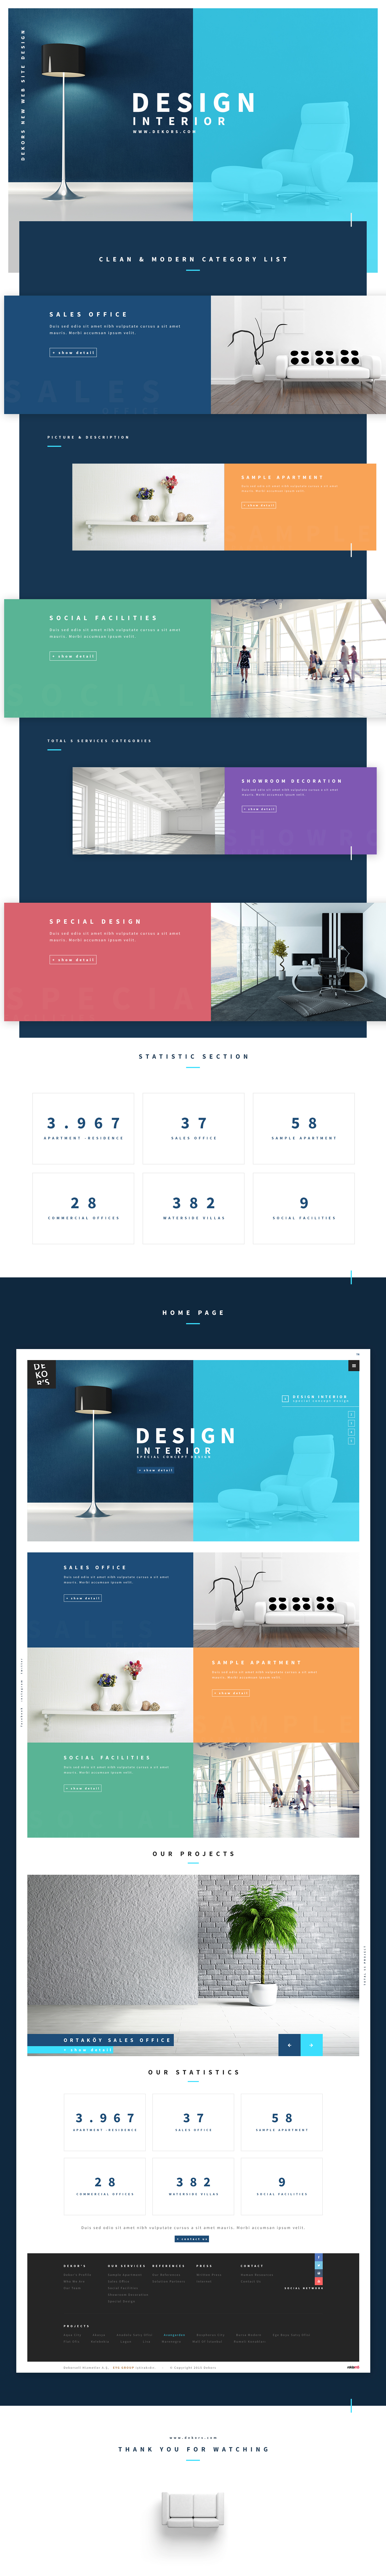 UI ux fresh modern Interior indoor Web homepage design decor dekors UserInterface Webdesign flat Layout